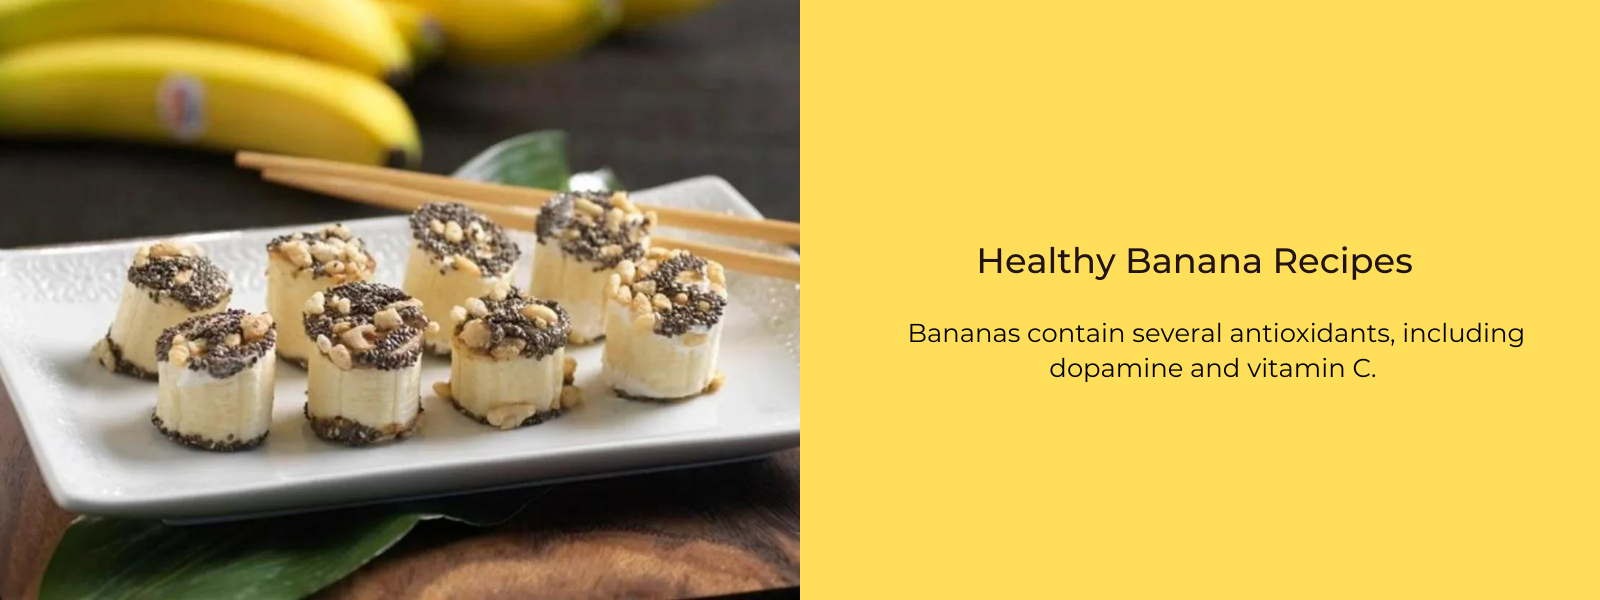 Healthy Banana Recipes for Everyone!